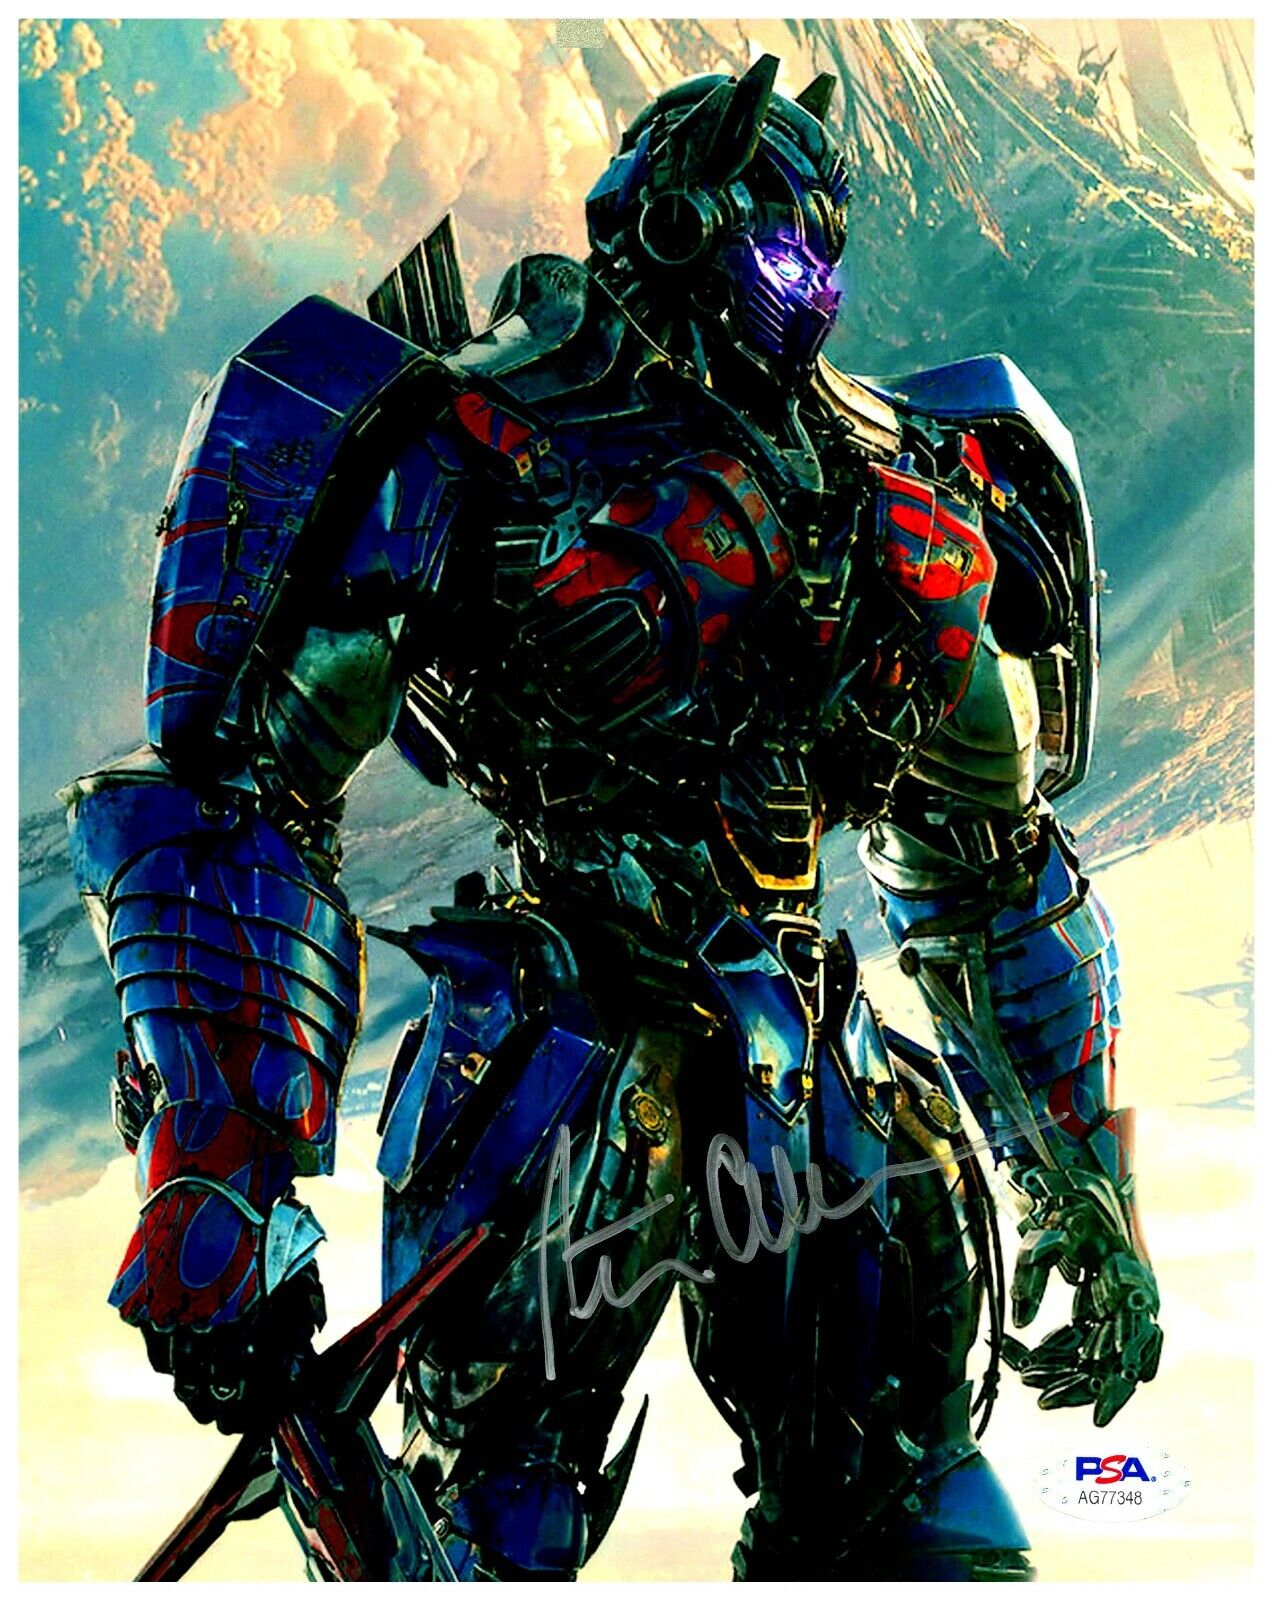 Peter Cullen Optimus Prime Transformers Actor Signed 8x10 Color Photo PSA A